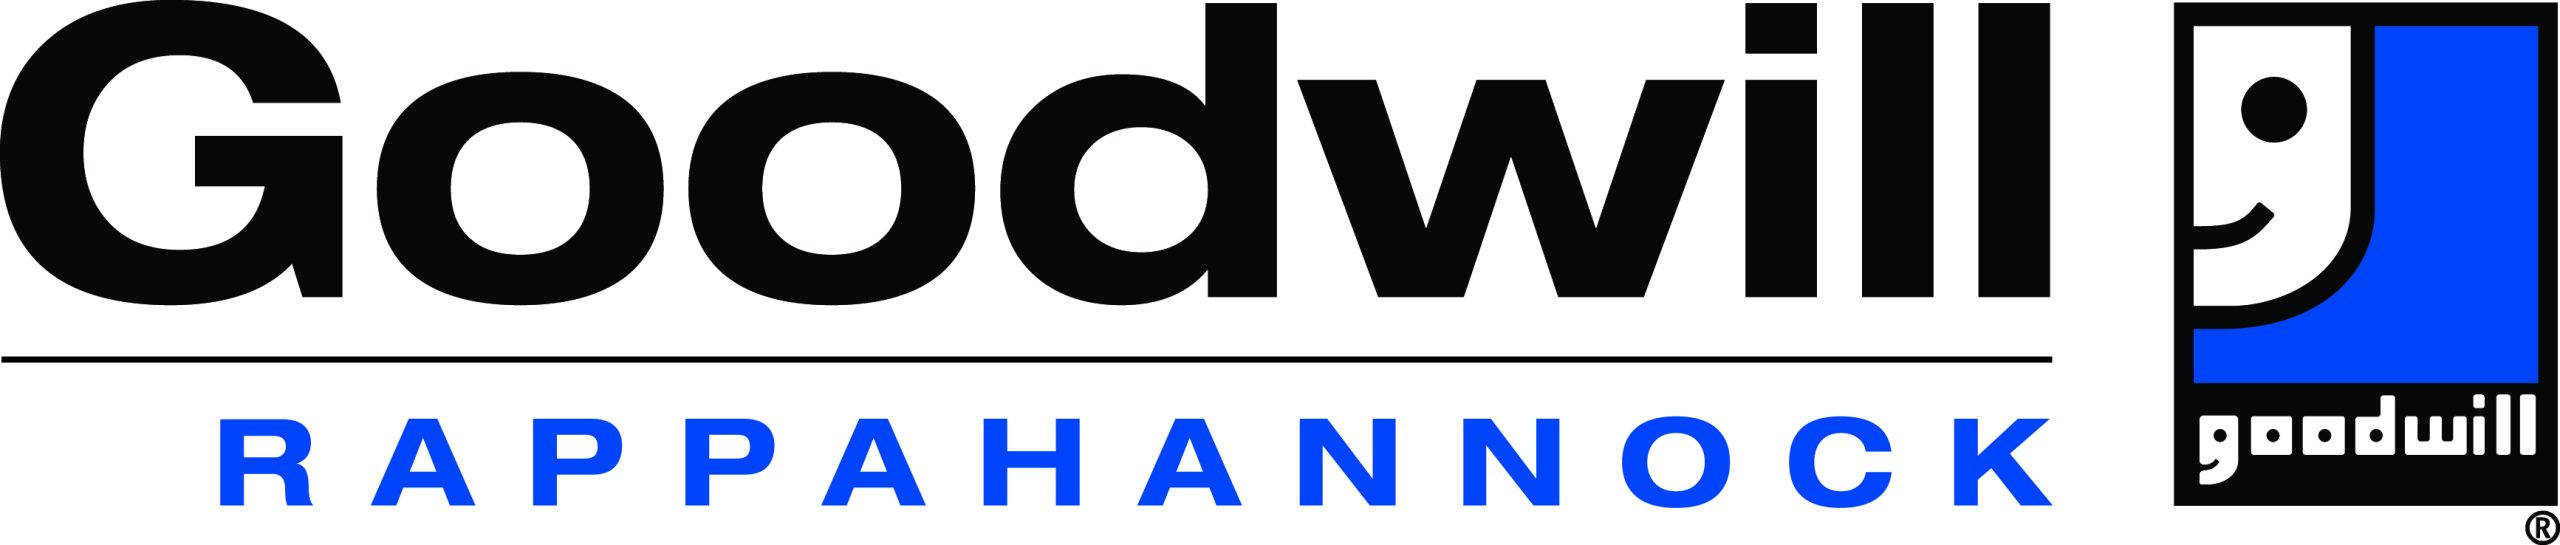 Rappahannock Goodwill Logo